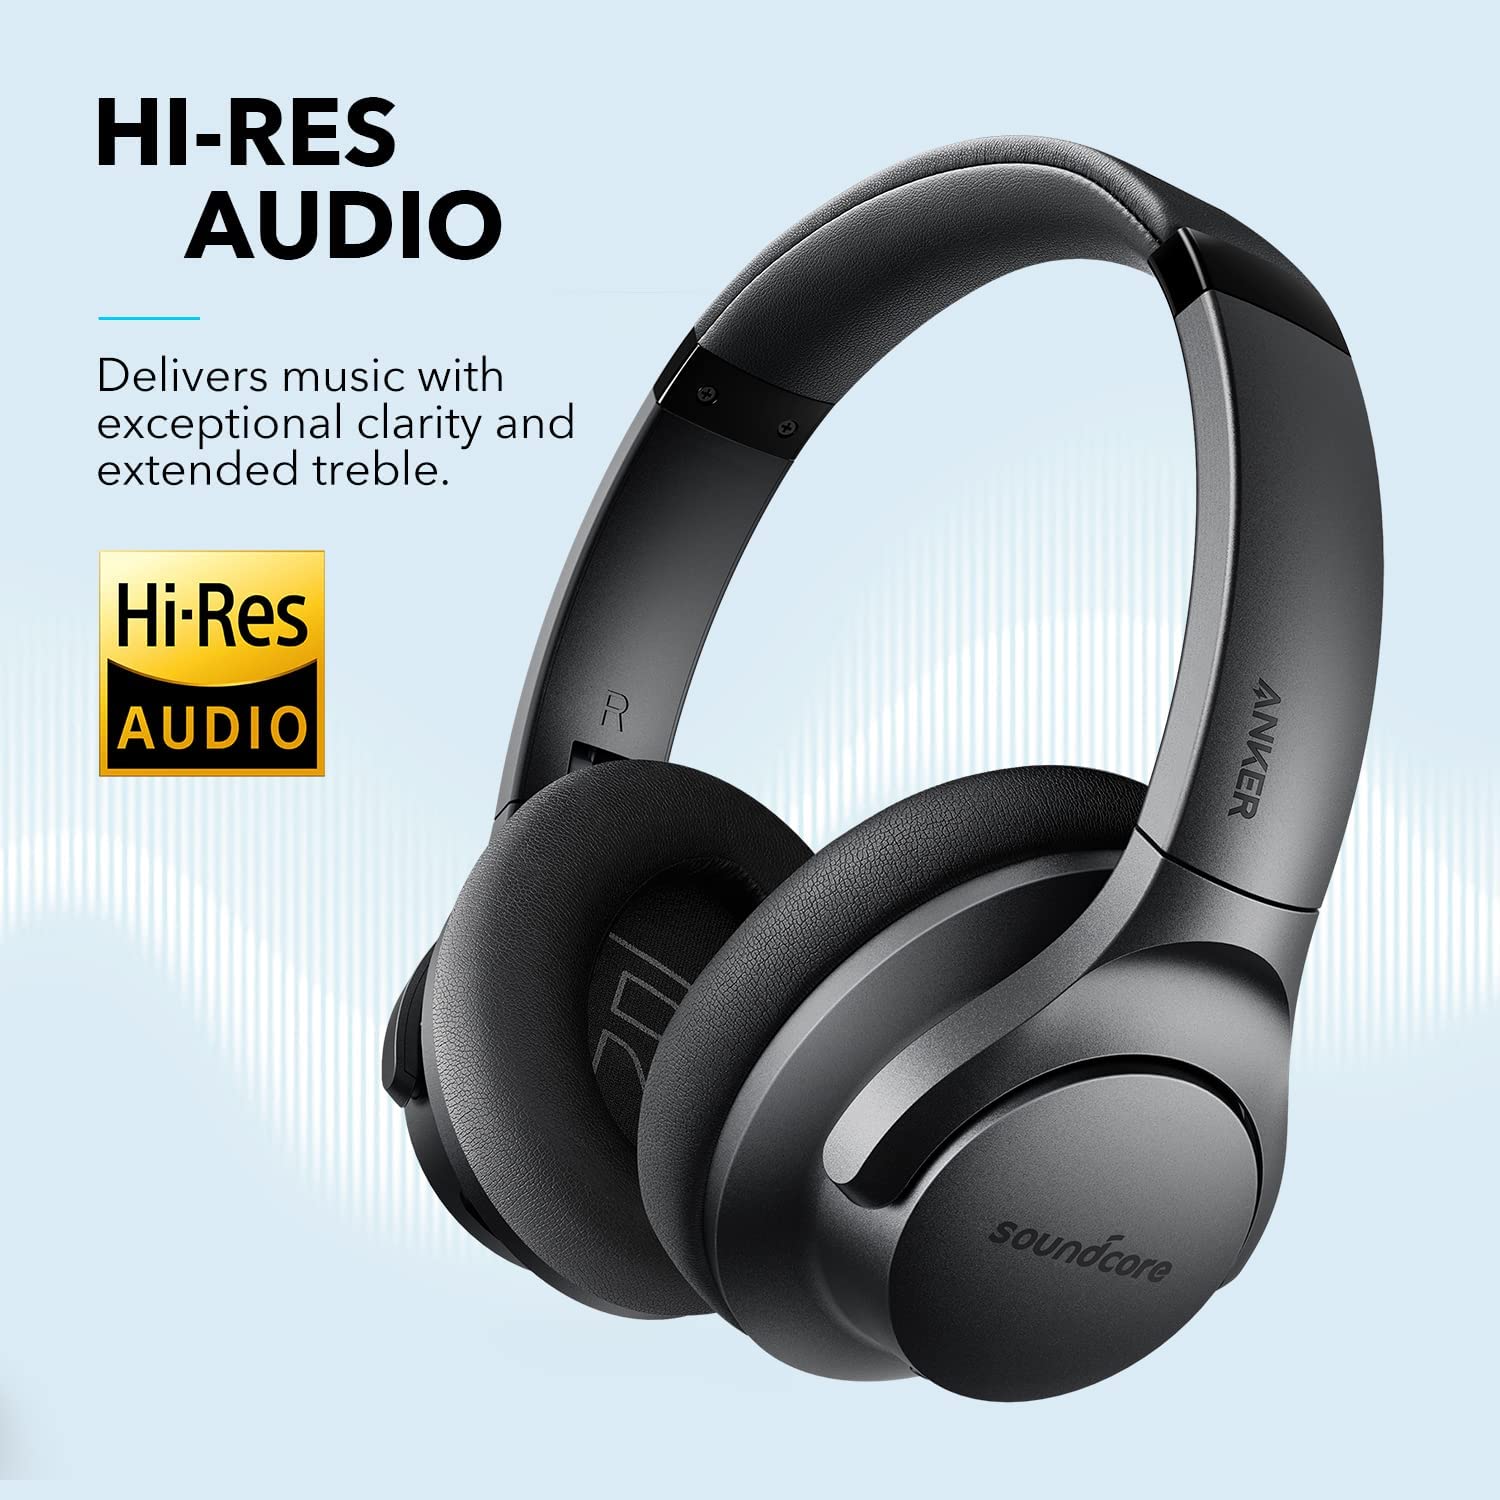 Anker Soundcore Life Q20 Hybrid Active Noise Cancelling Headphone